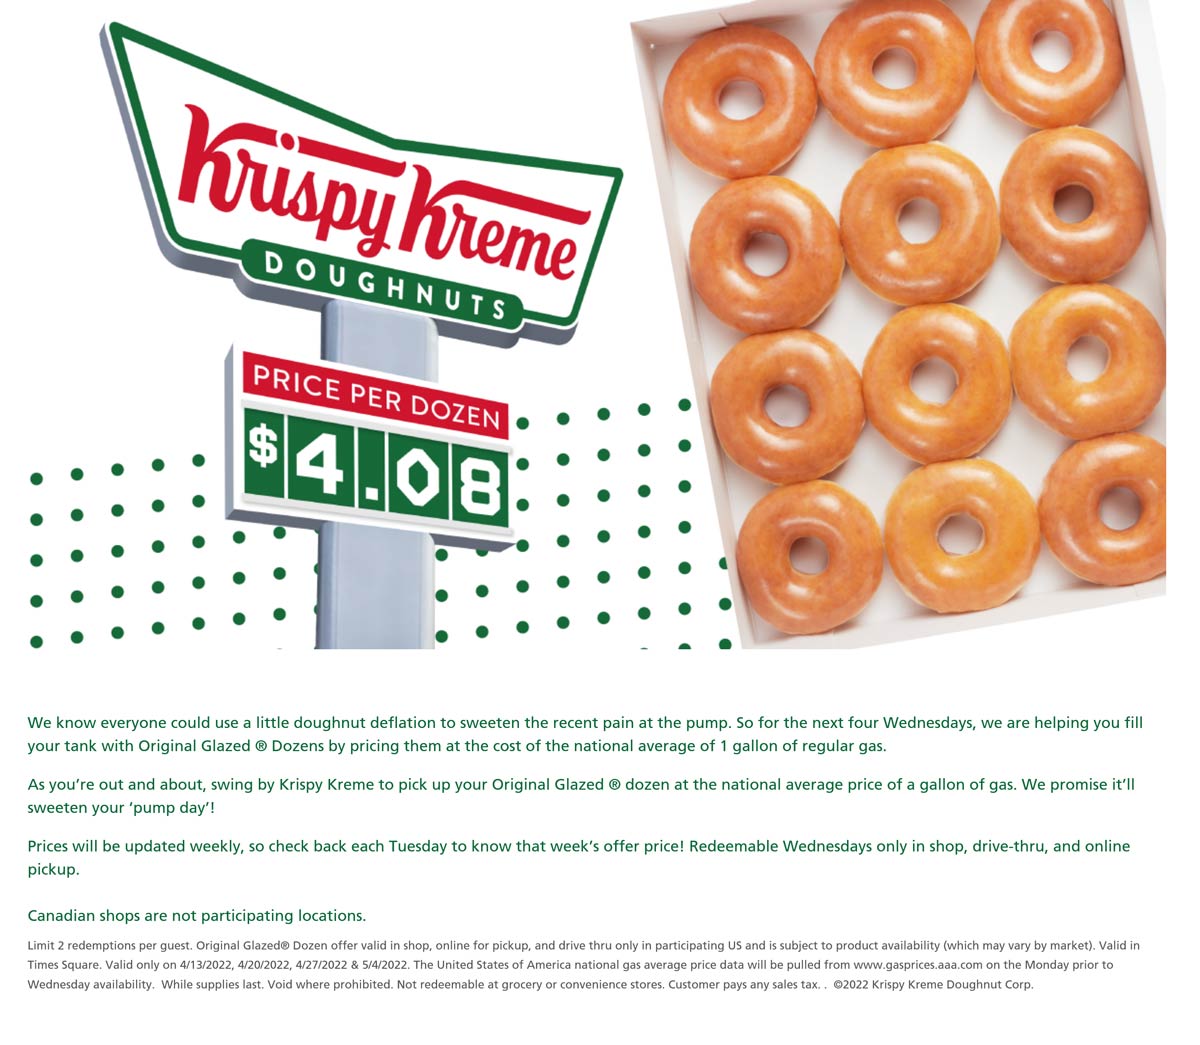 Krispy Kreme restaurants Coupon  $4.08 dozen doughnuts today at Krispy Kreme #krispykreme 